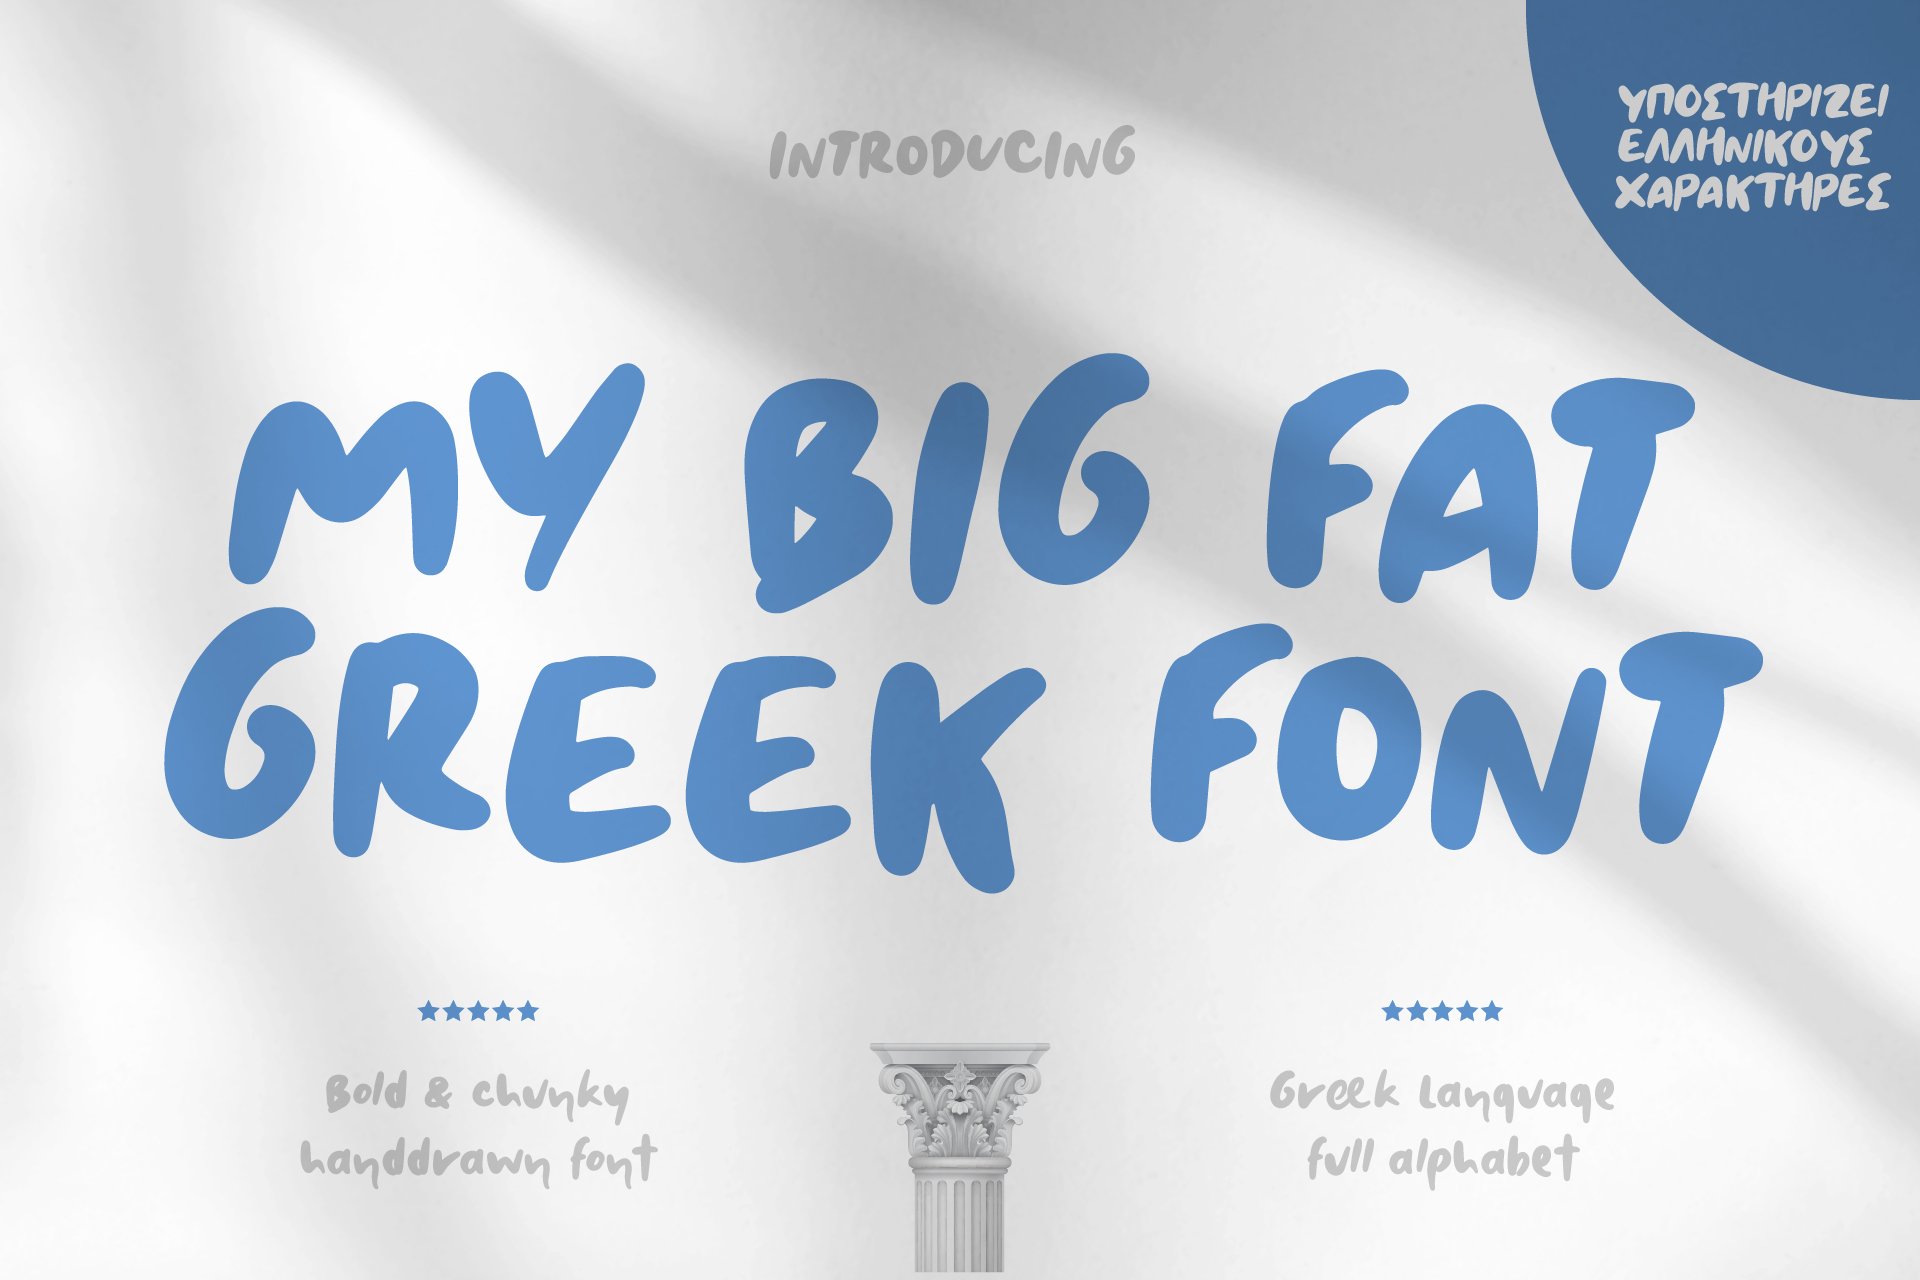 My Big Fat Greek Font cover image.